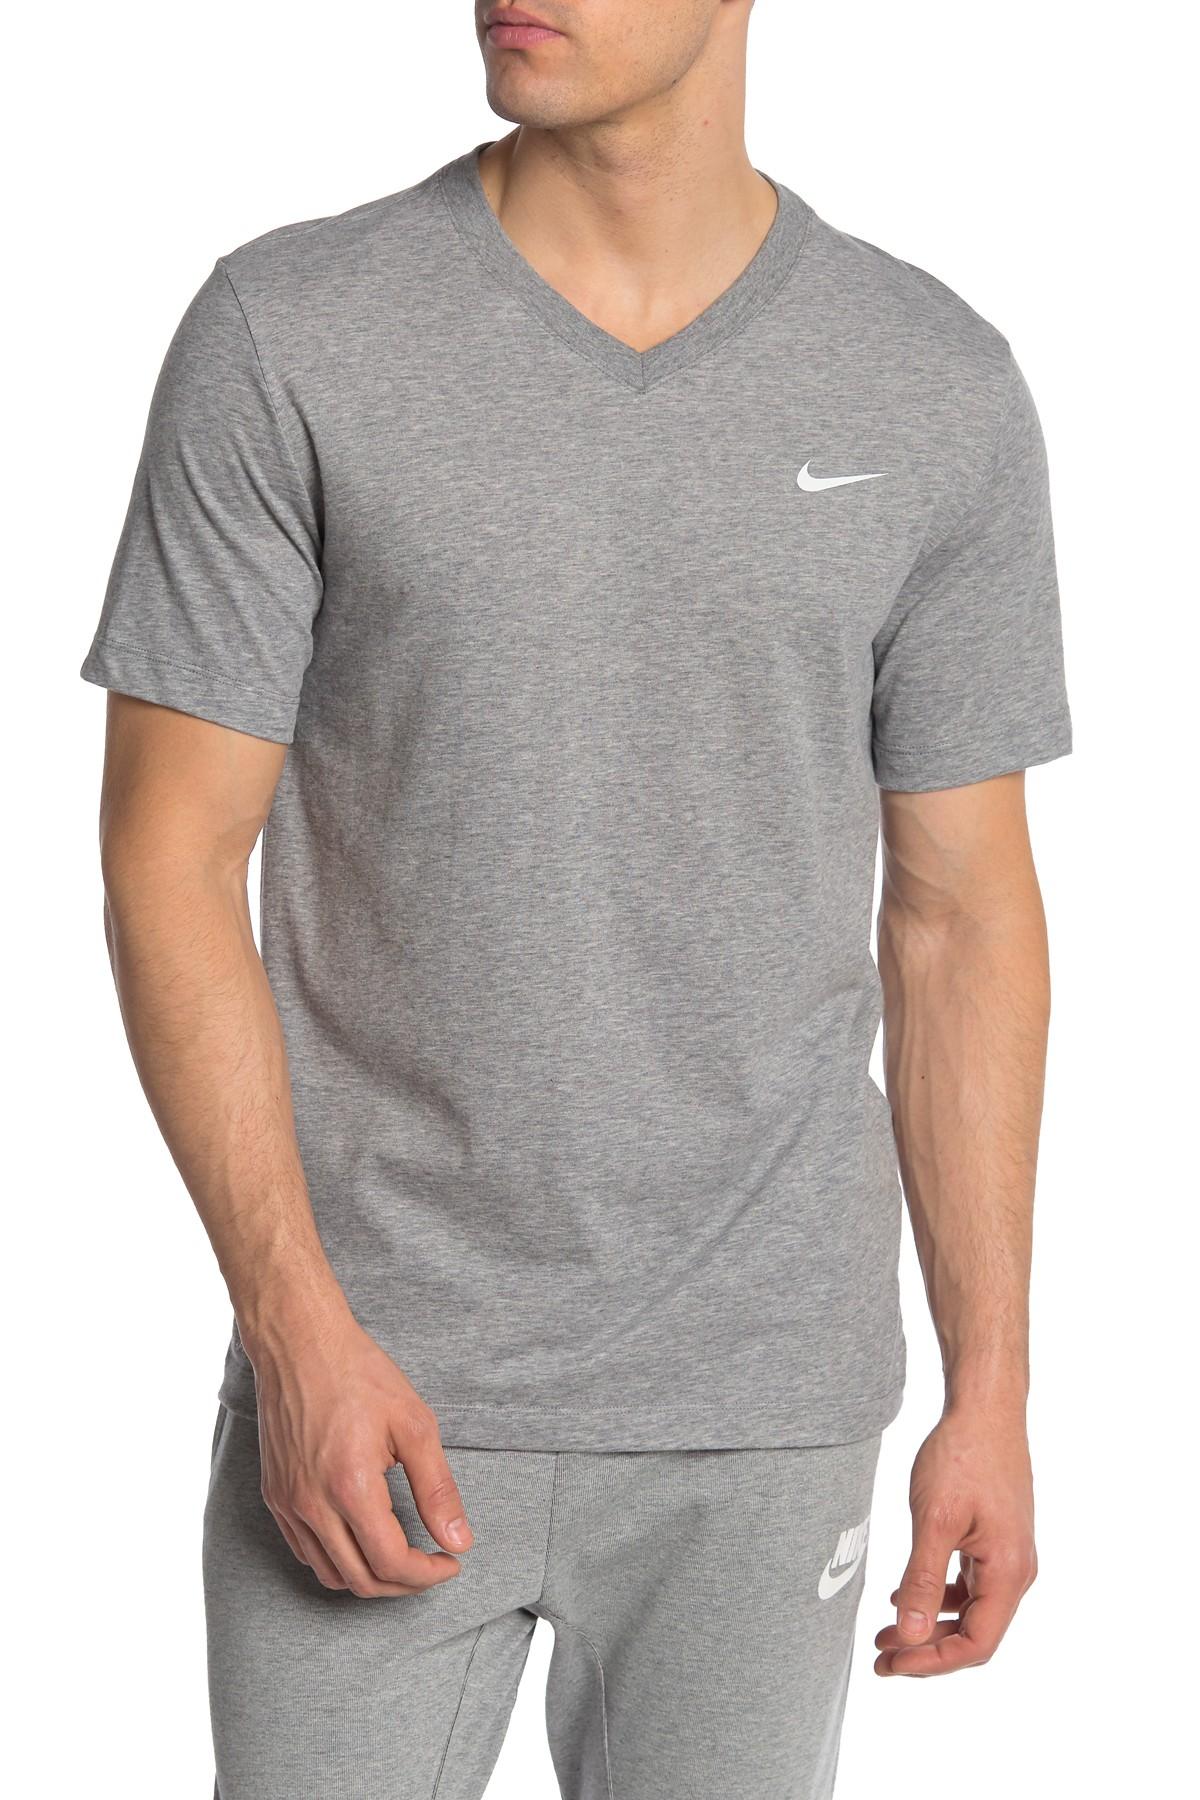 Nike V-neck Legend Dri-fit T-shirt in Gray for Men - Lyst